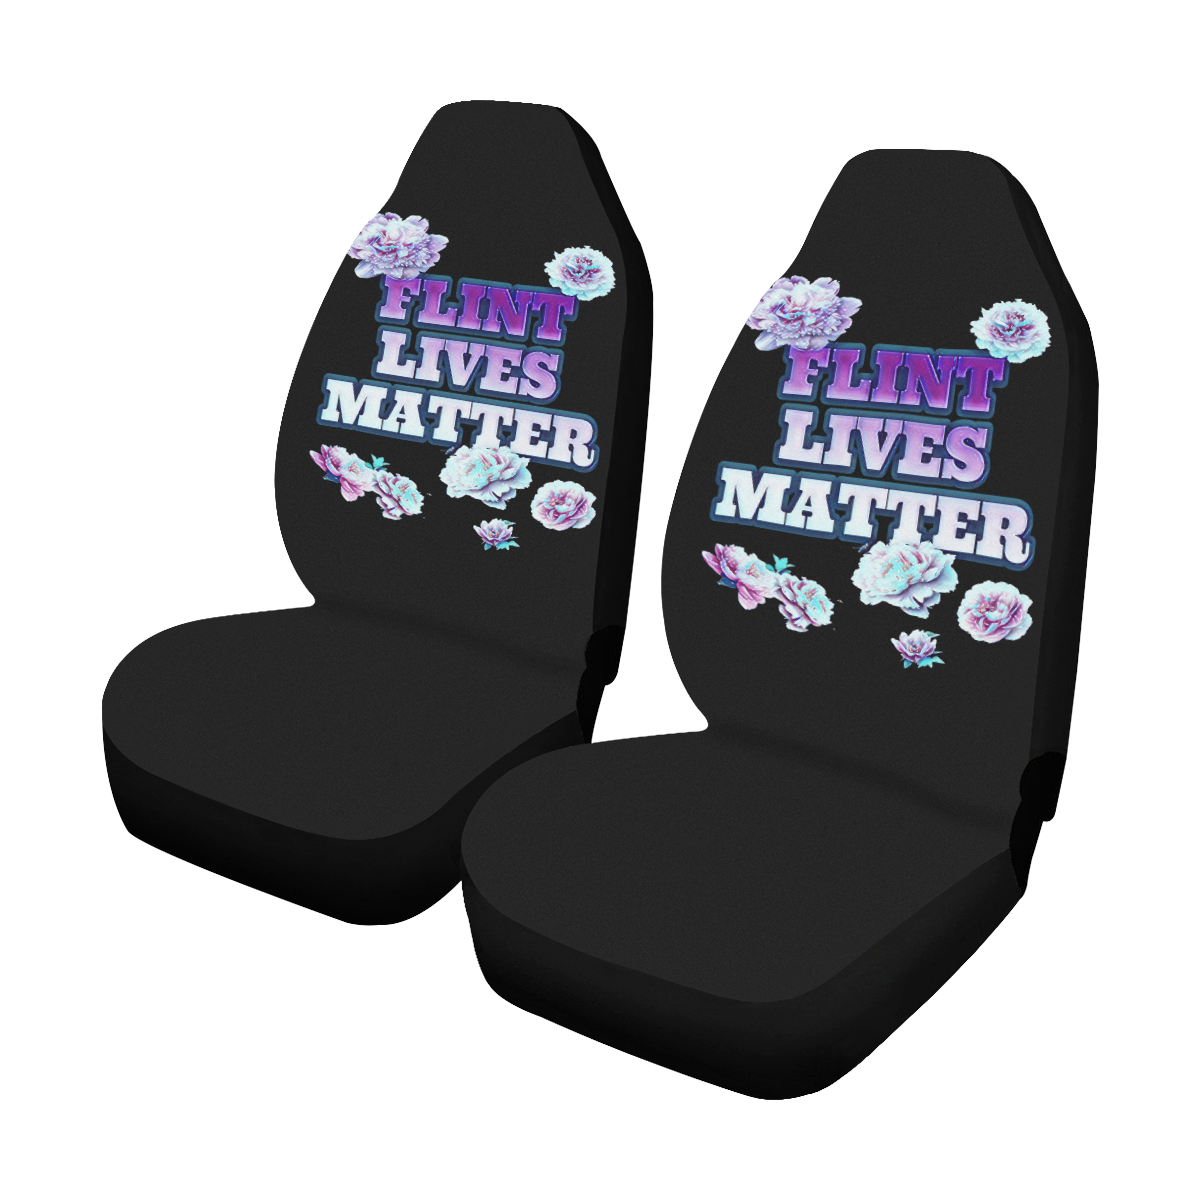 Black Flint Lives Matter Car Seat Covers (Set of 2)